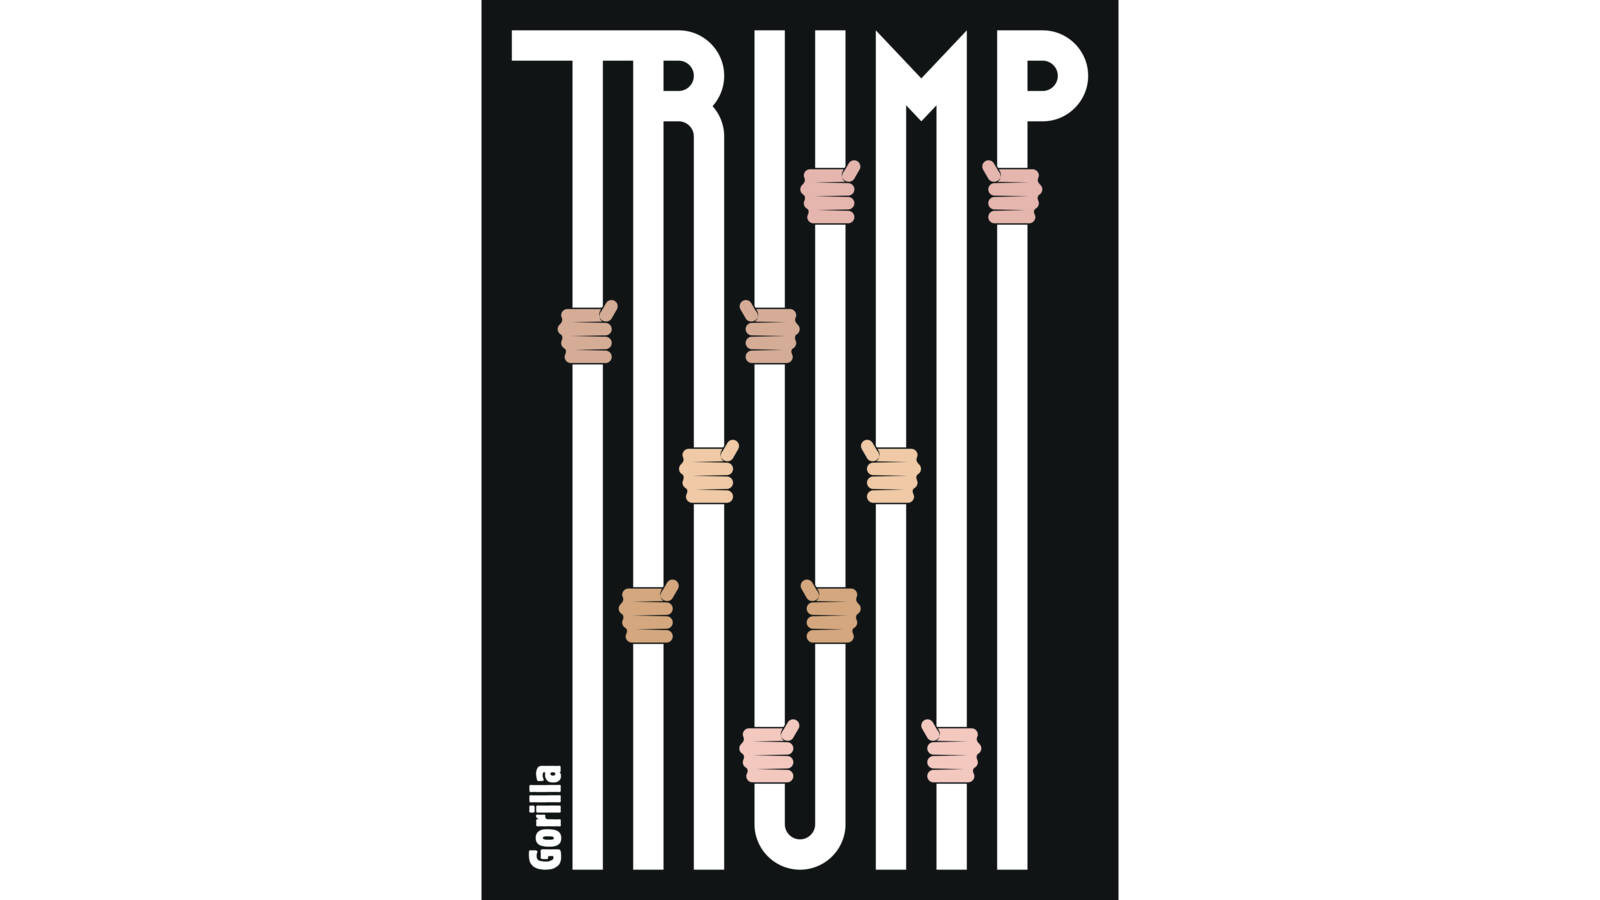 Trump jails immigrant children, cartoon by Gorilla